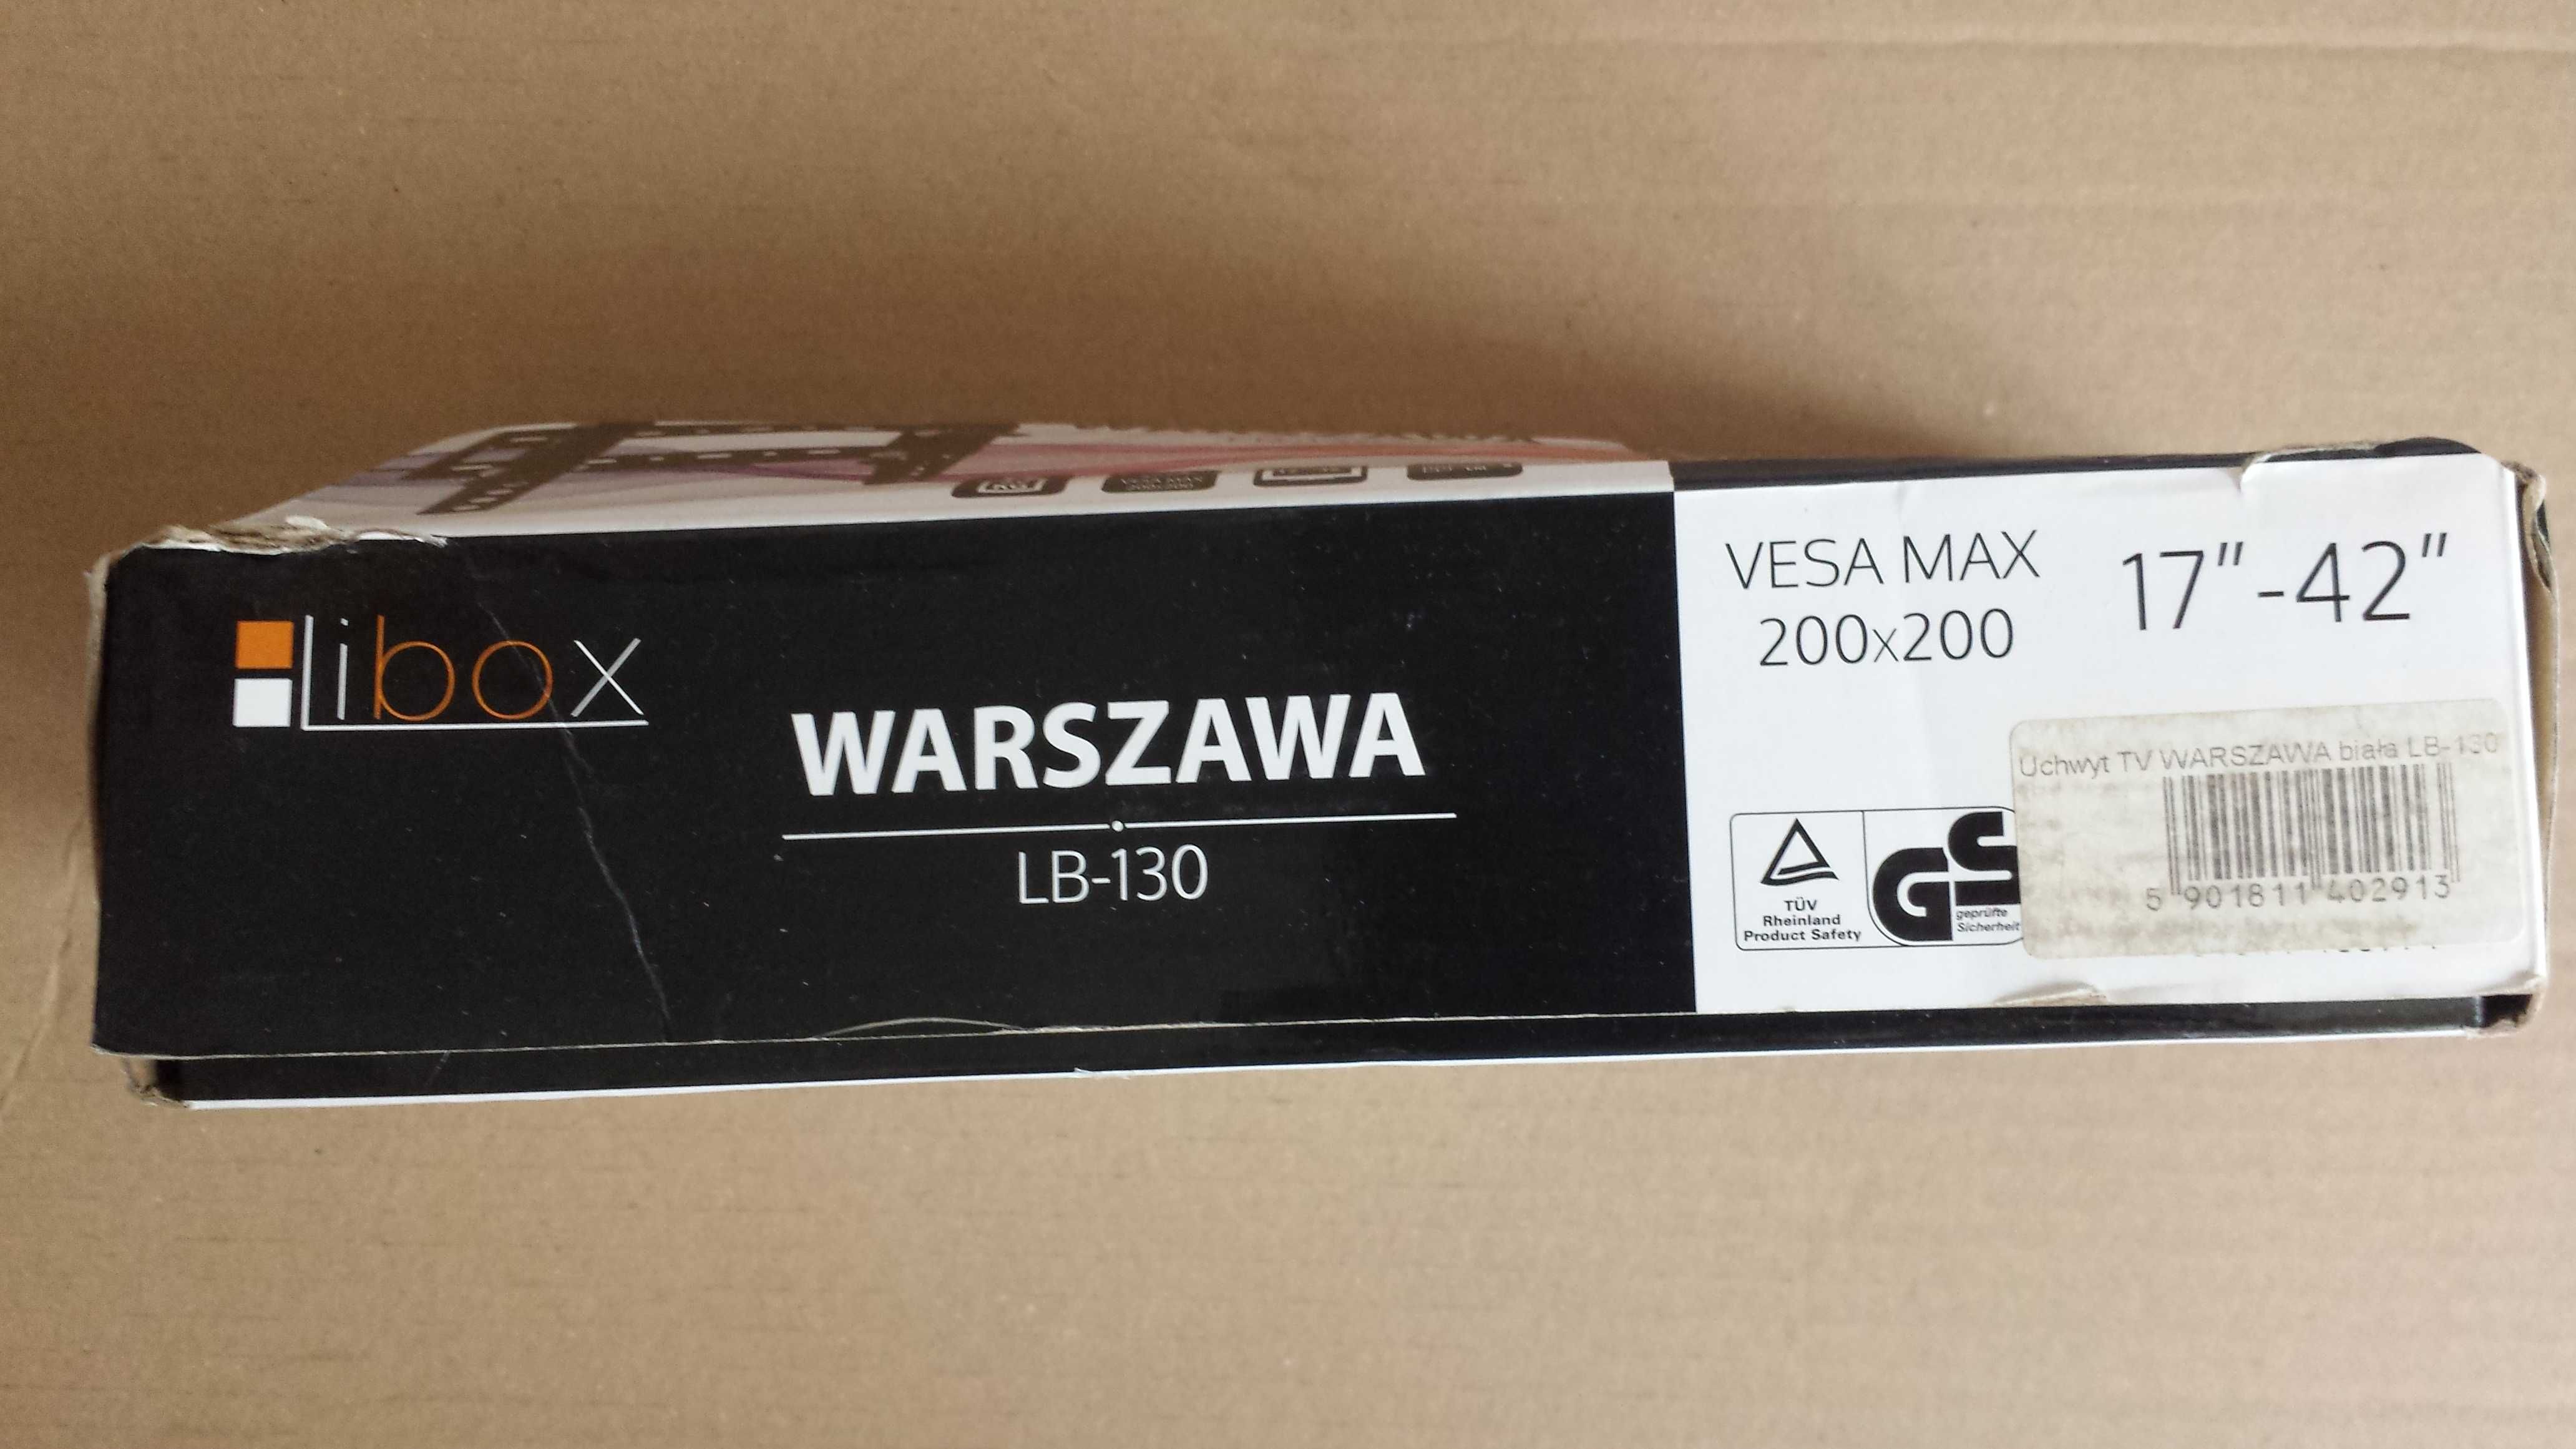 Uchwyt TV LCD 17"- 42" WARSZAWA bialy LIBOX LB-130 nowy